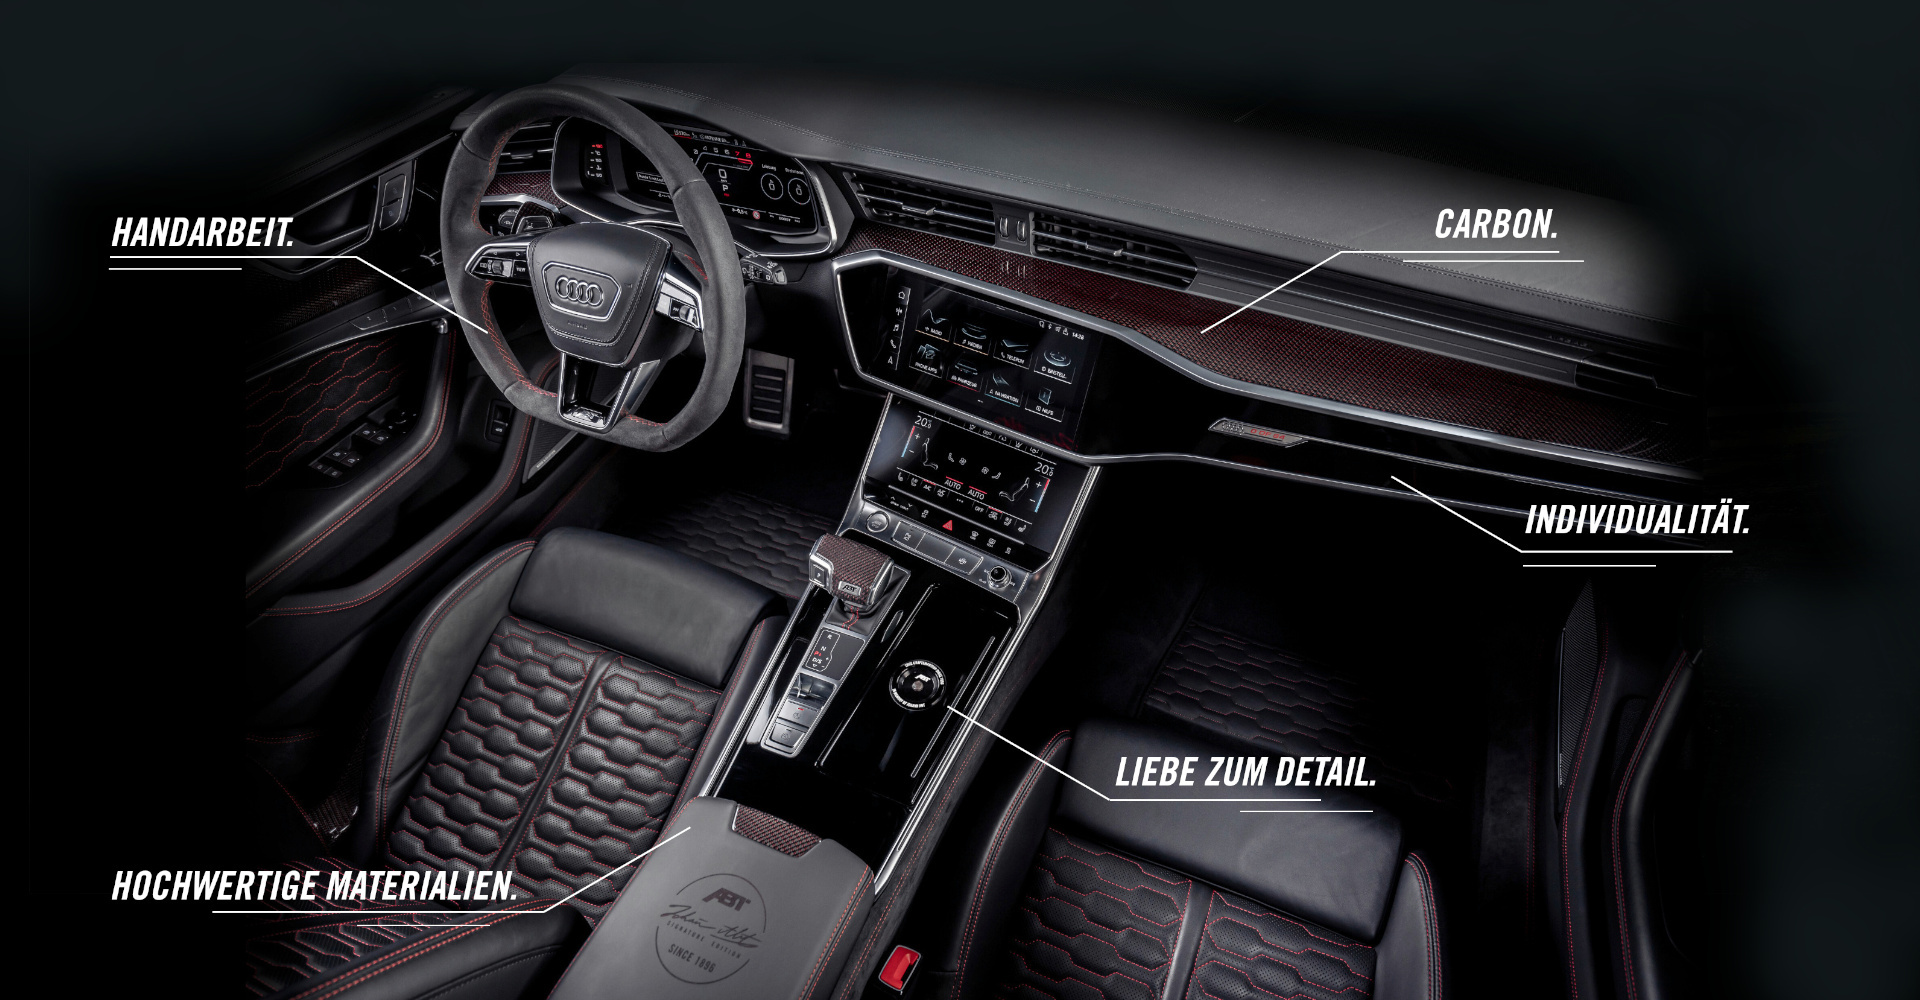 ABT Interieur - Audi Tuning, VW Tuning, Chiptuning von ABT Sportsline.